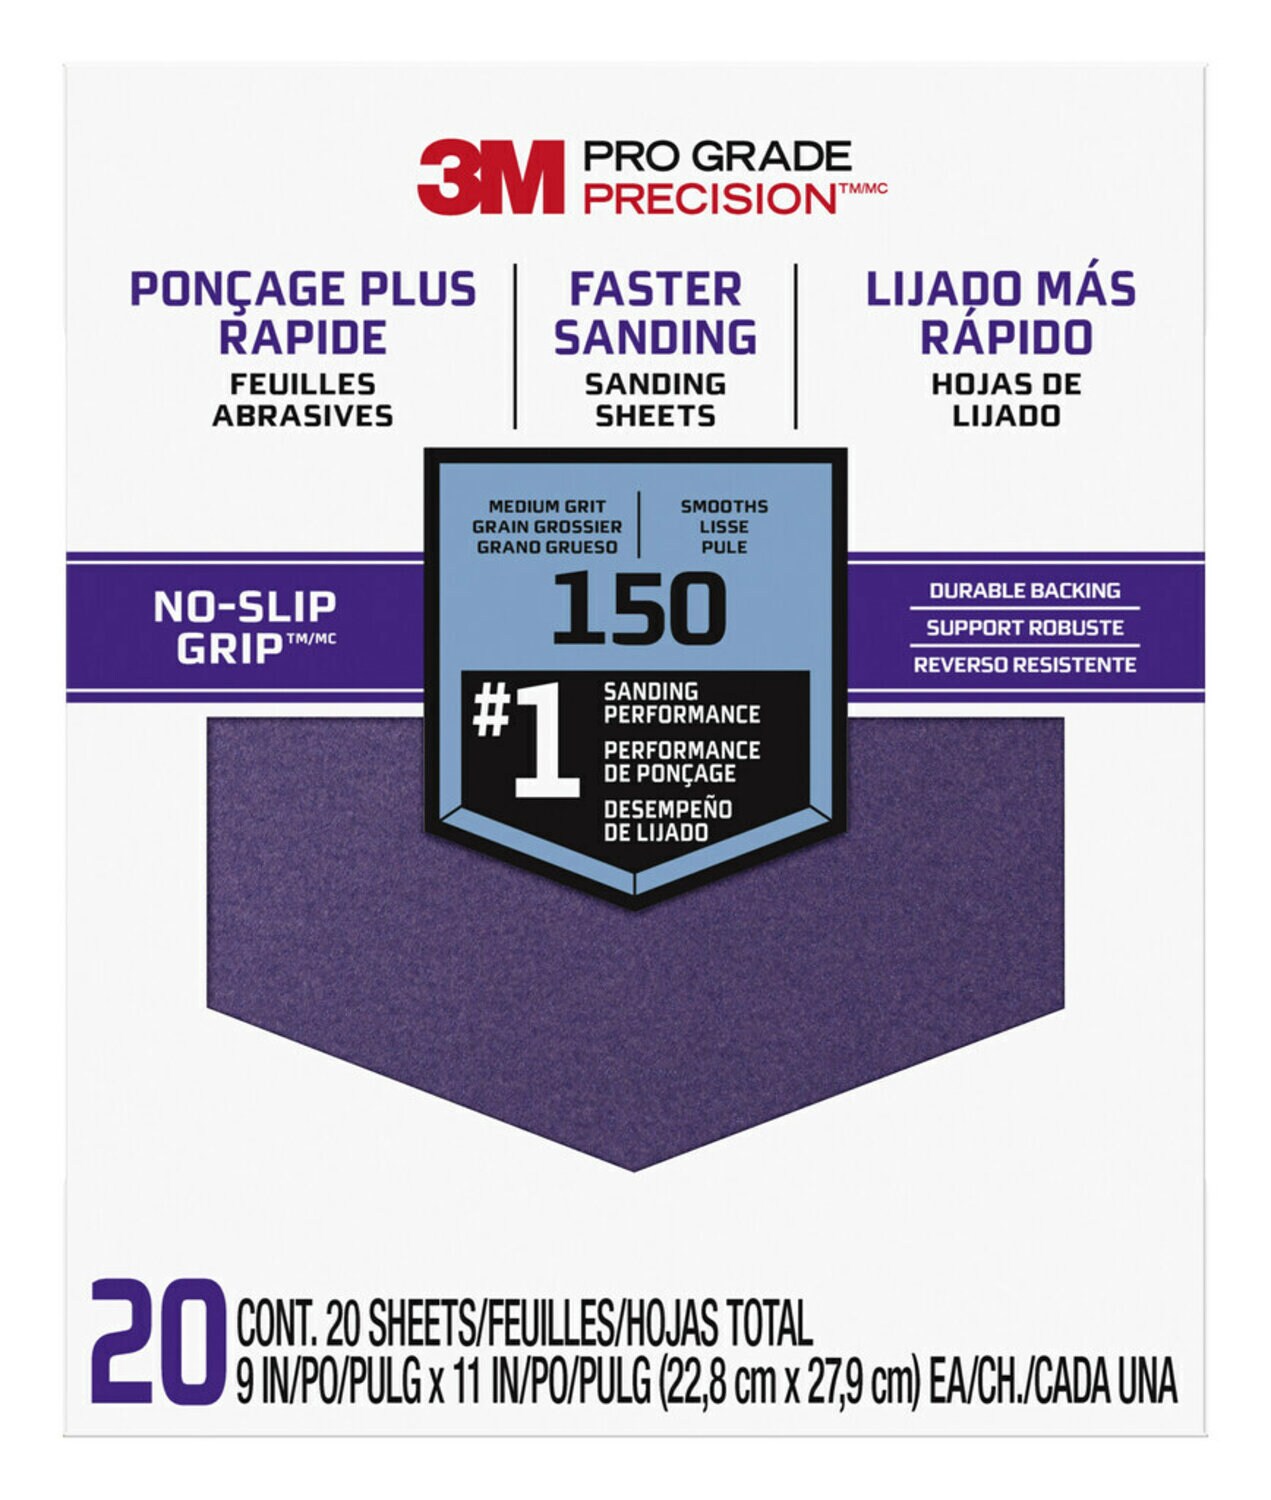 7100149129 - 3M Pro Grade Precision Faster Sanding Sanding Sheets150 grit Medium,
27150TRI-20, 9 in x 11 in, 20/pk